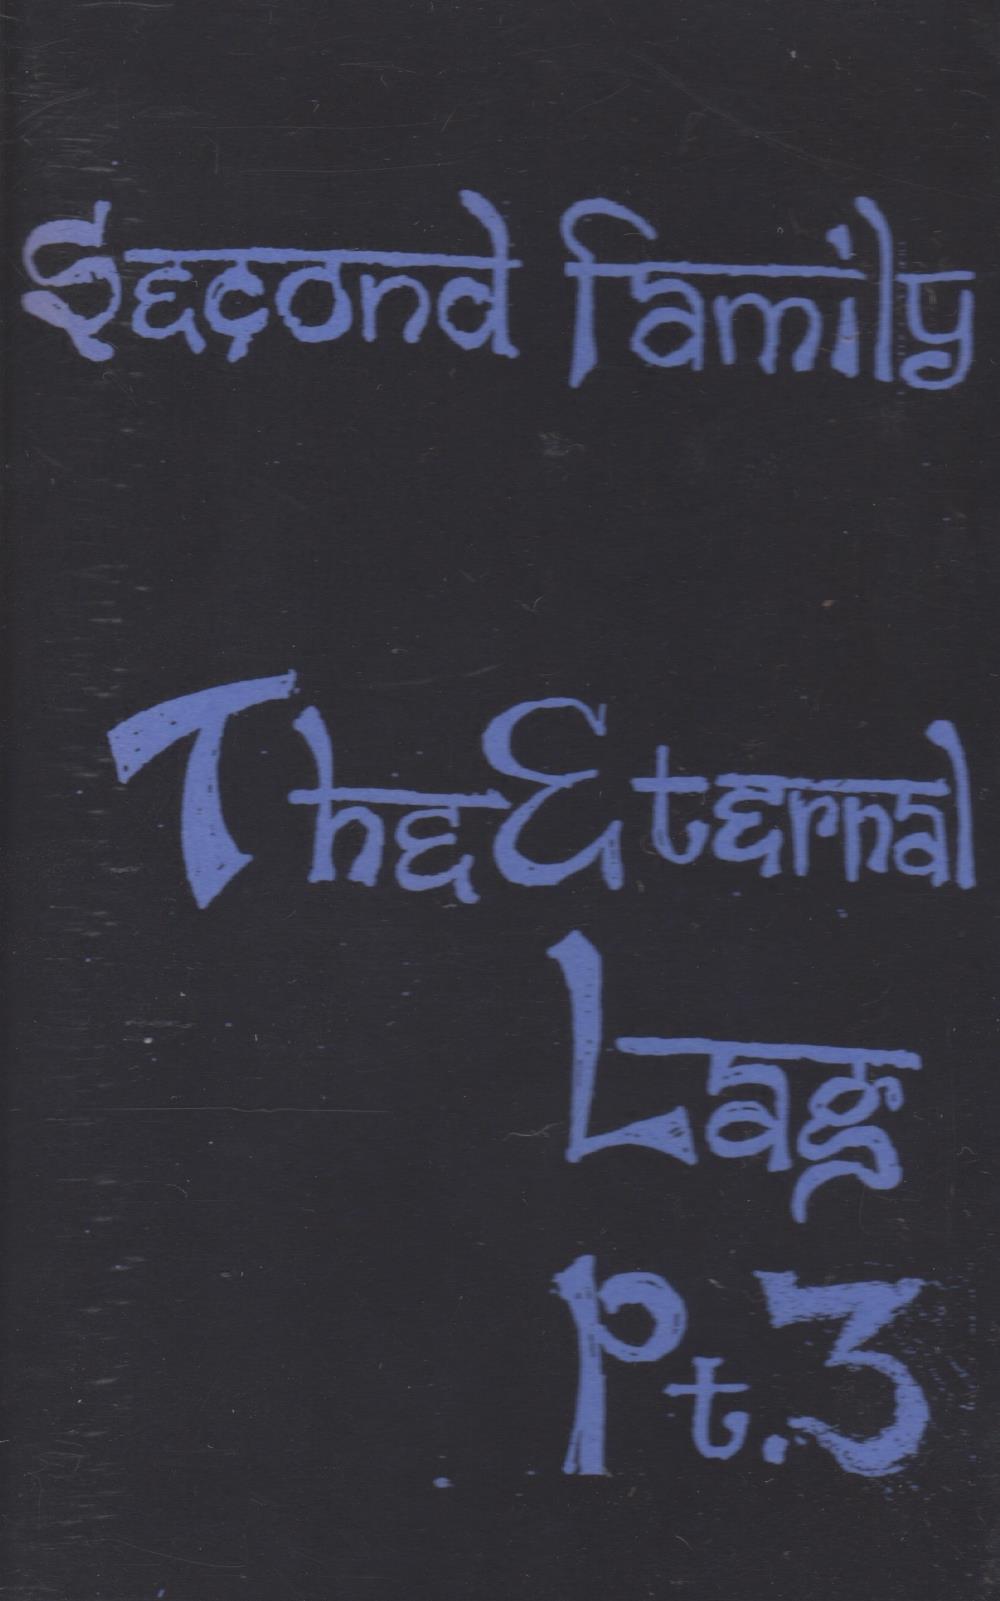 Second Family Band The Eternal Lag Pt. 3 album cover